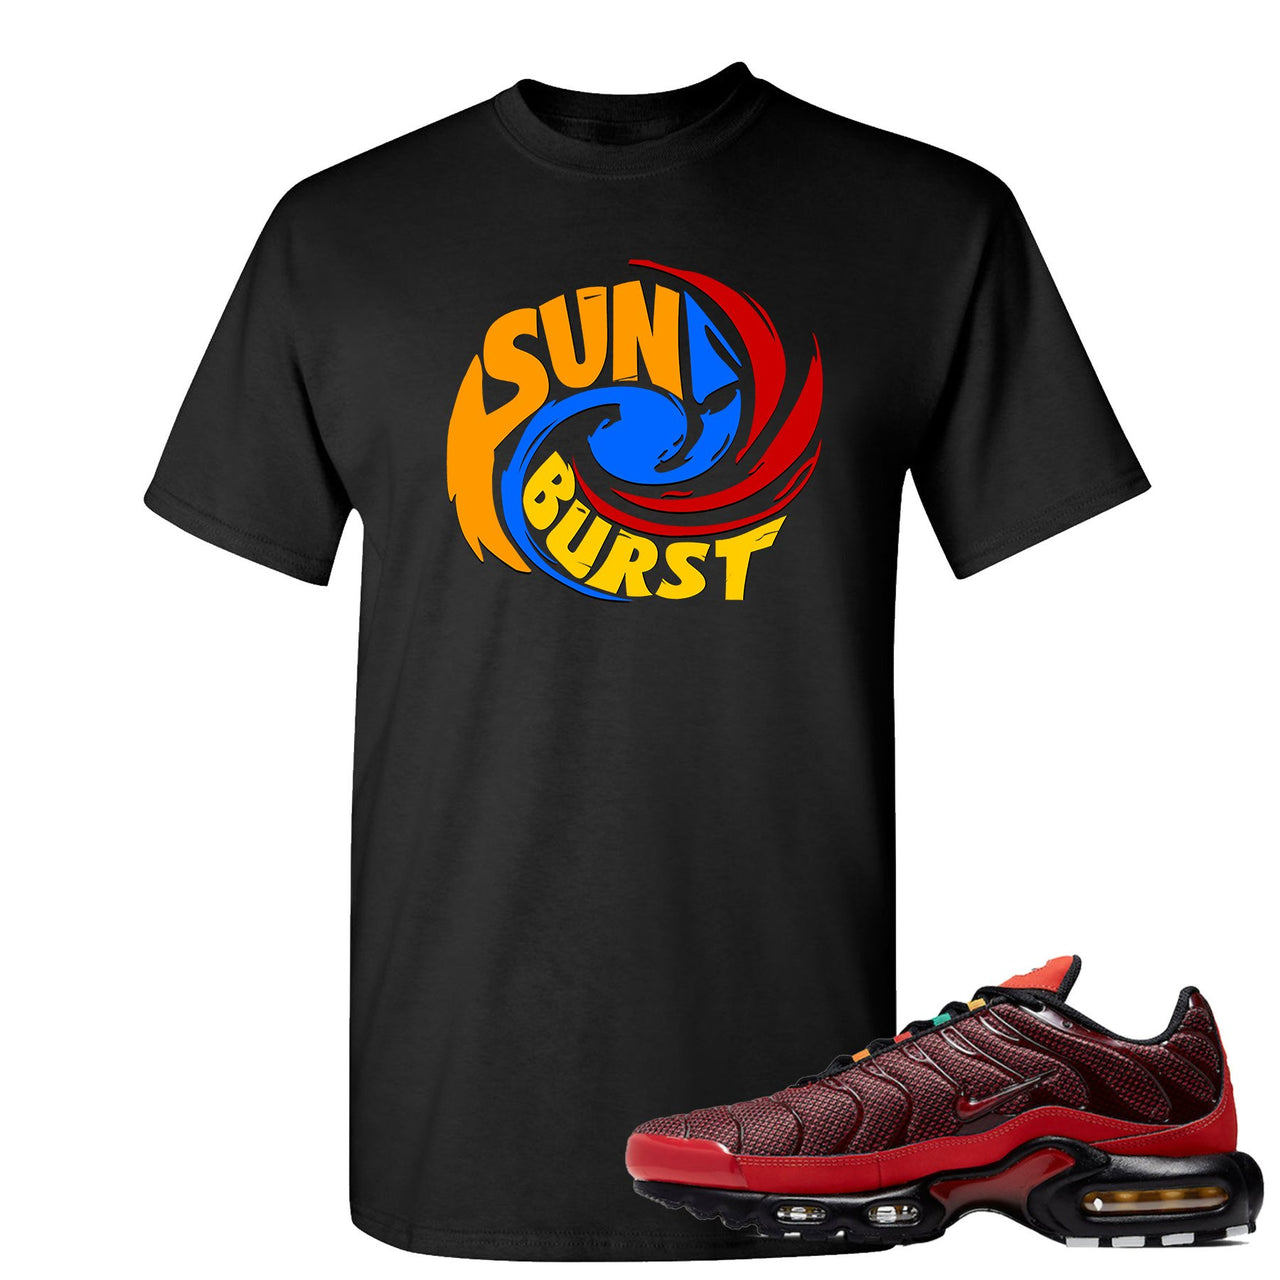 printed on the front of the air max plus sunburst sneaker matching black tee shirt is the sunburst hurricane logo